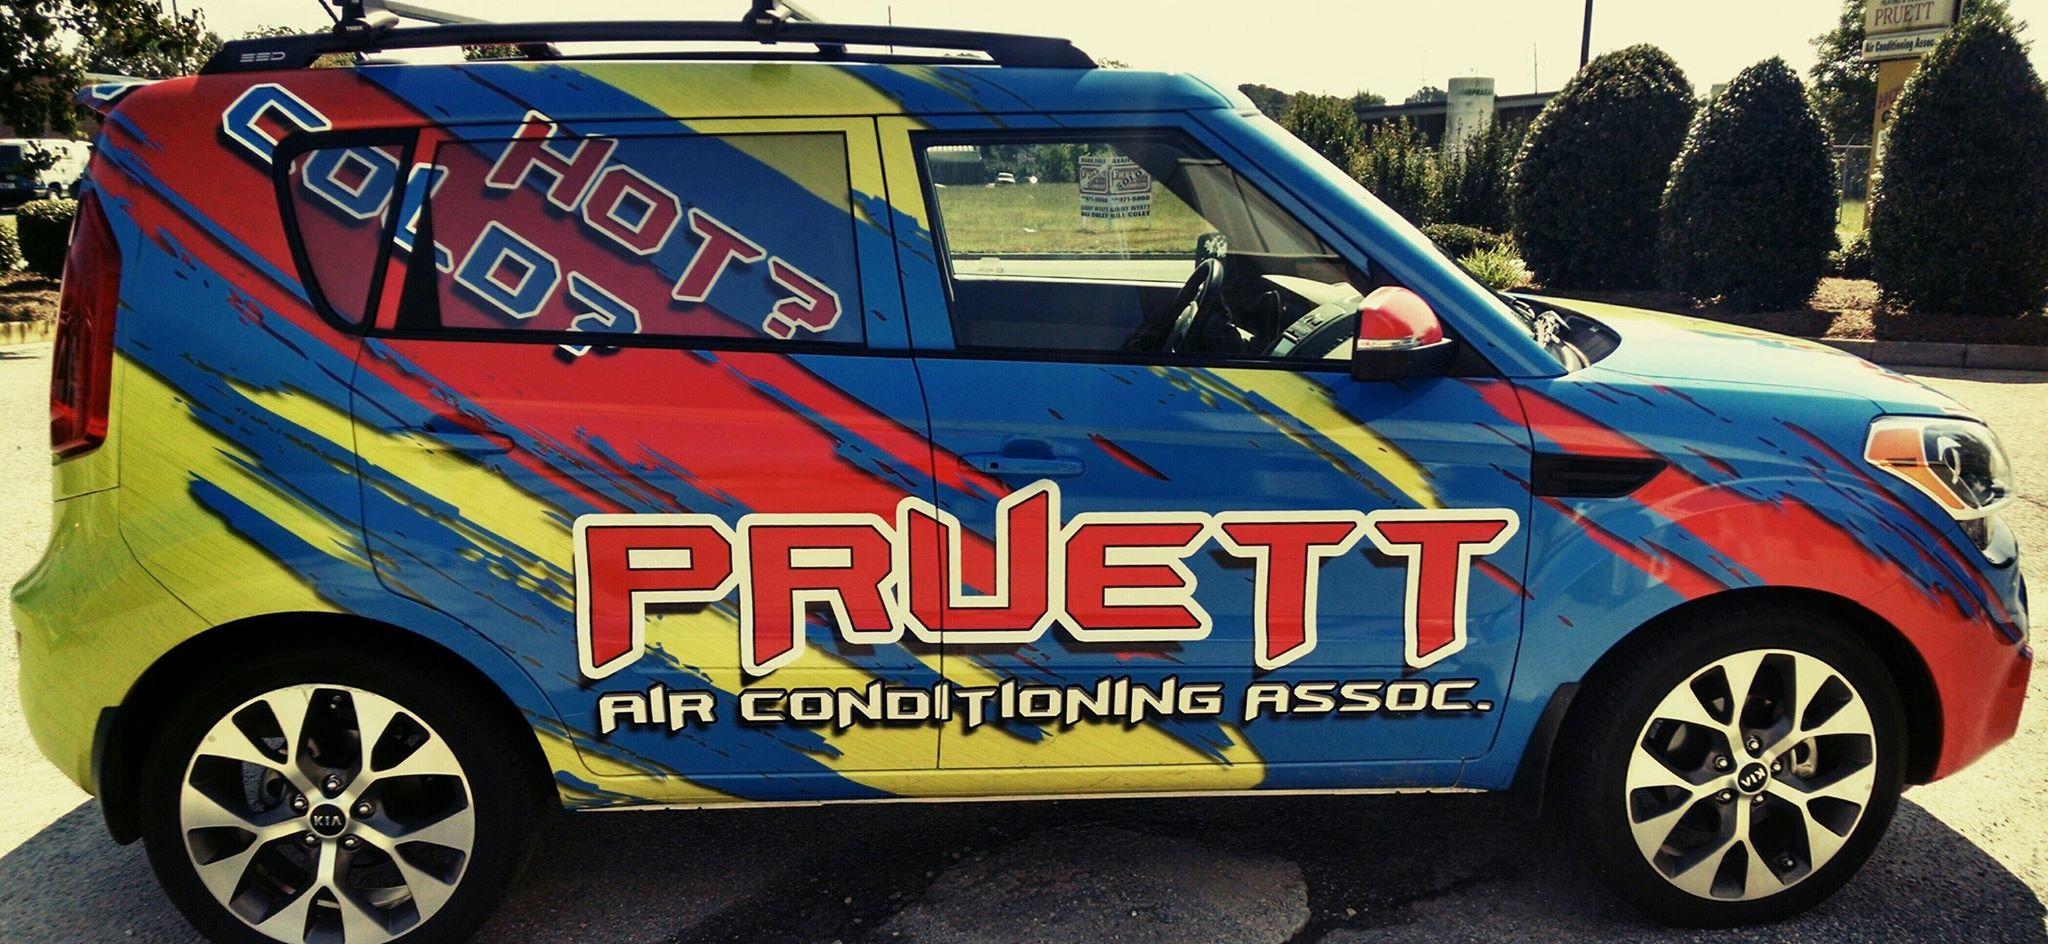 Pruett Air Conditioning Photo